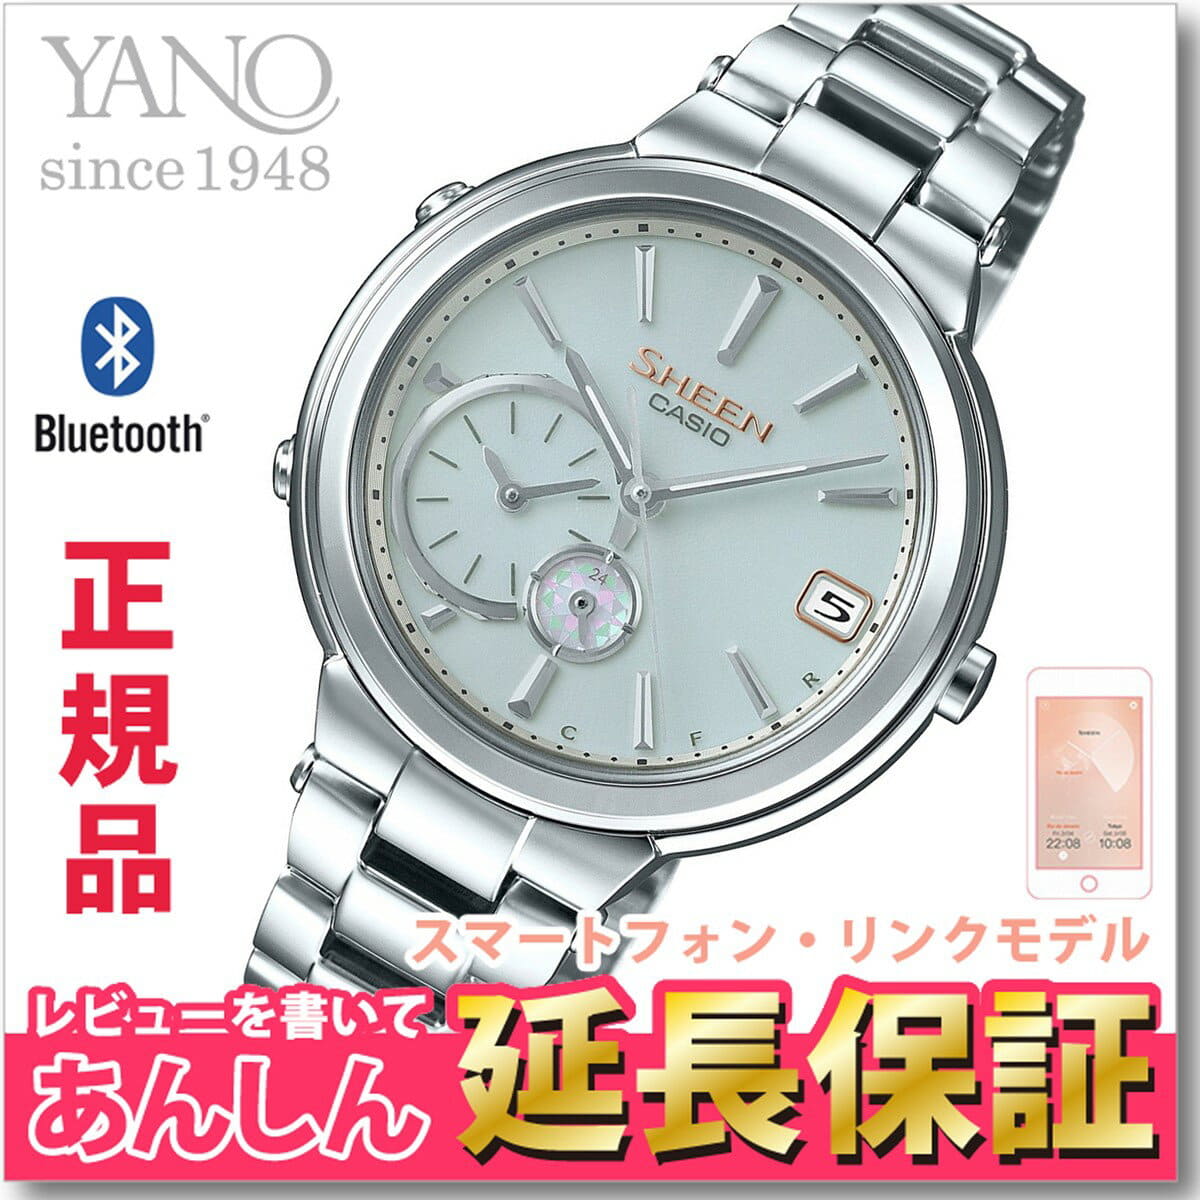 New]Casio SHEEN SHB-200D-7AJF smartphone rinkumoderuboyajutaimuringu  Bluetooth lady's solar watch analog CASIO SHEEN [product made in Japan]  [RCP] _10spl for Bluetooth - BE FORWARD Store